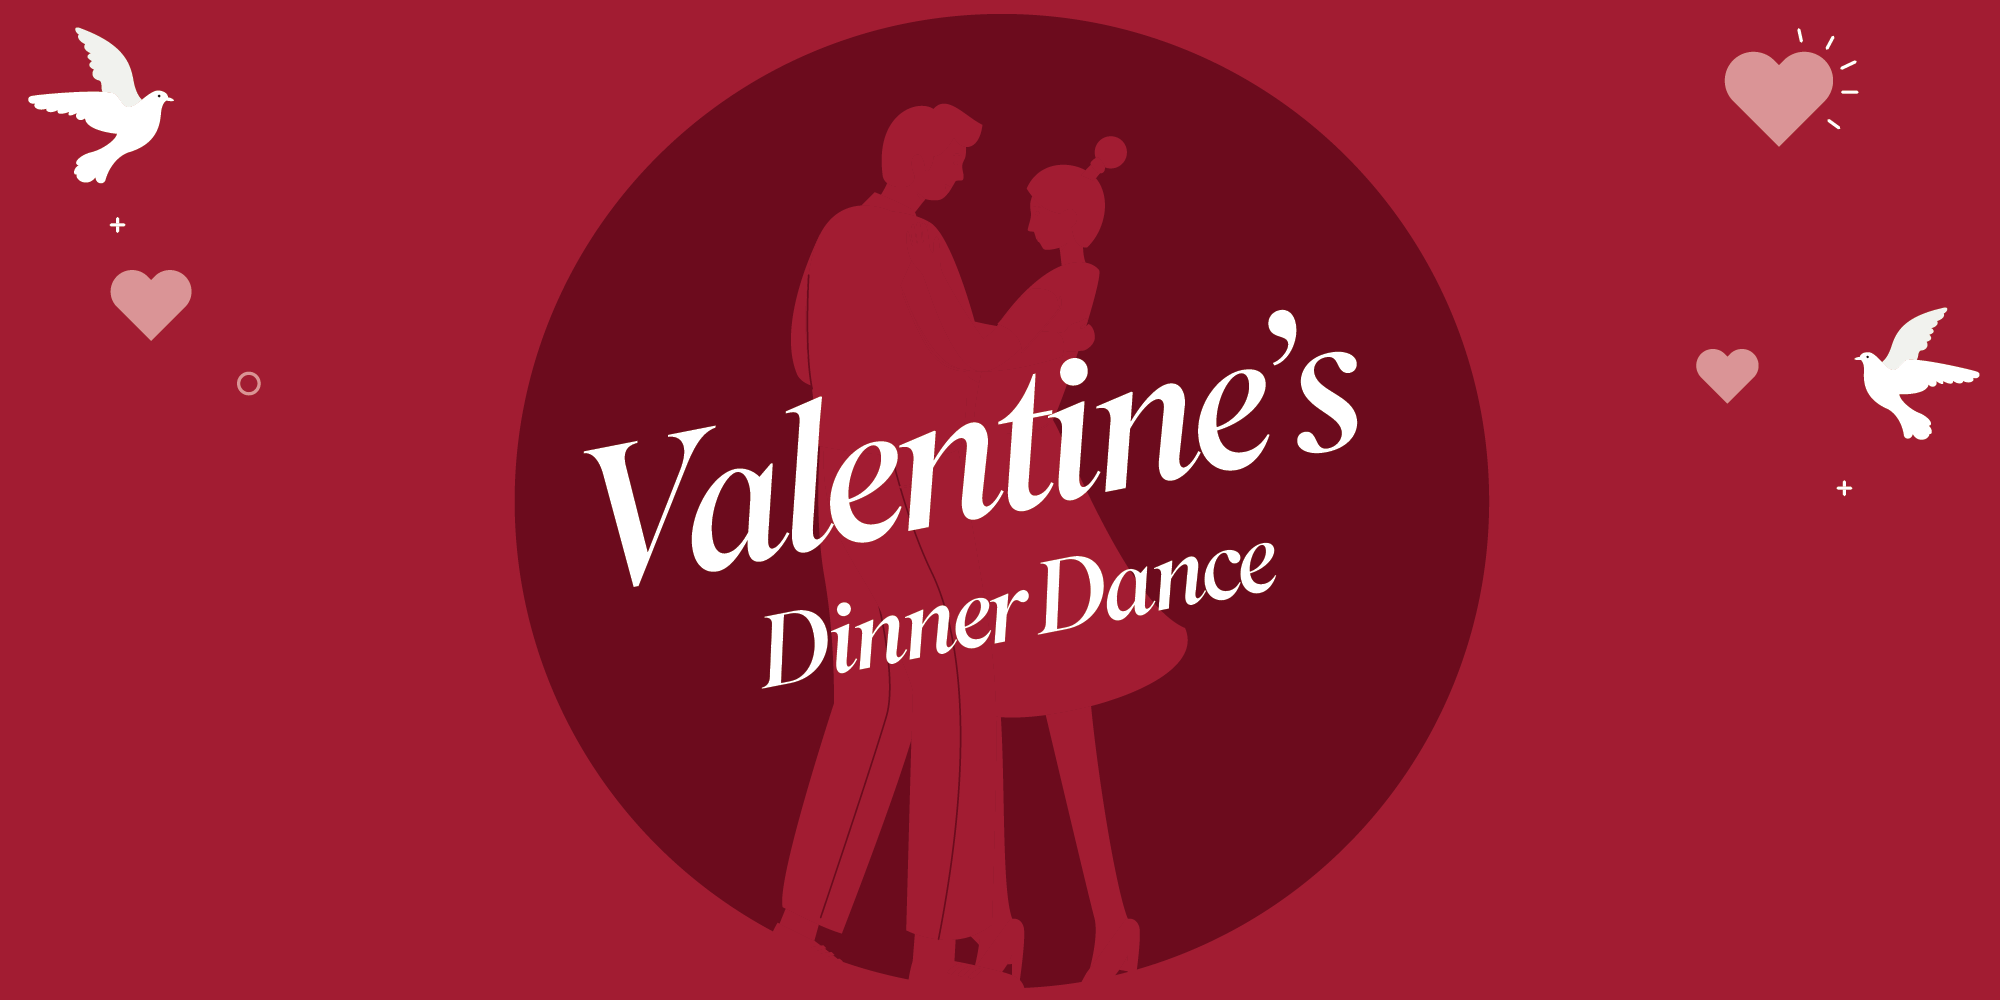 Valentine’s Dinner Dance